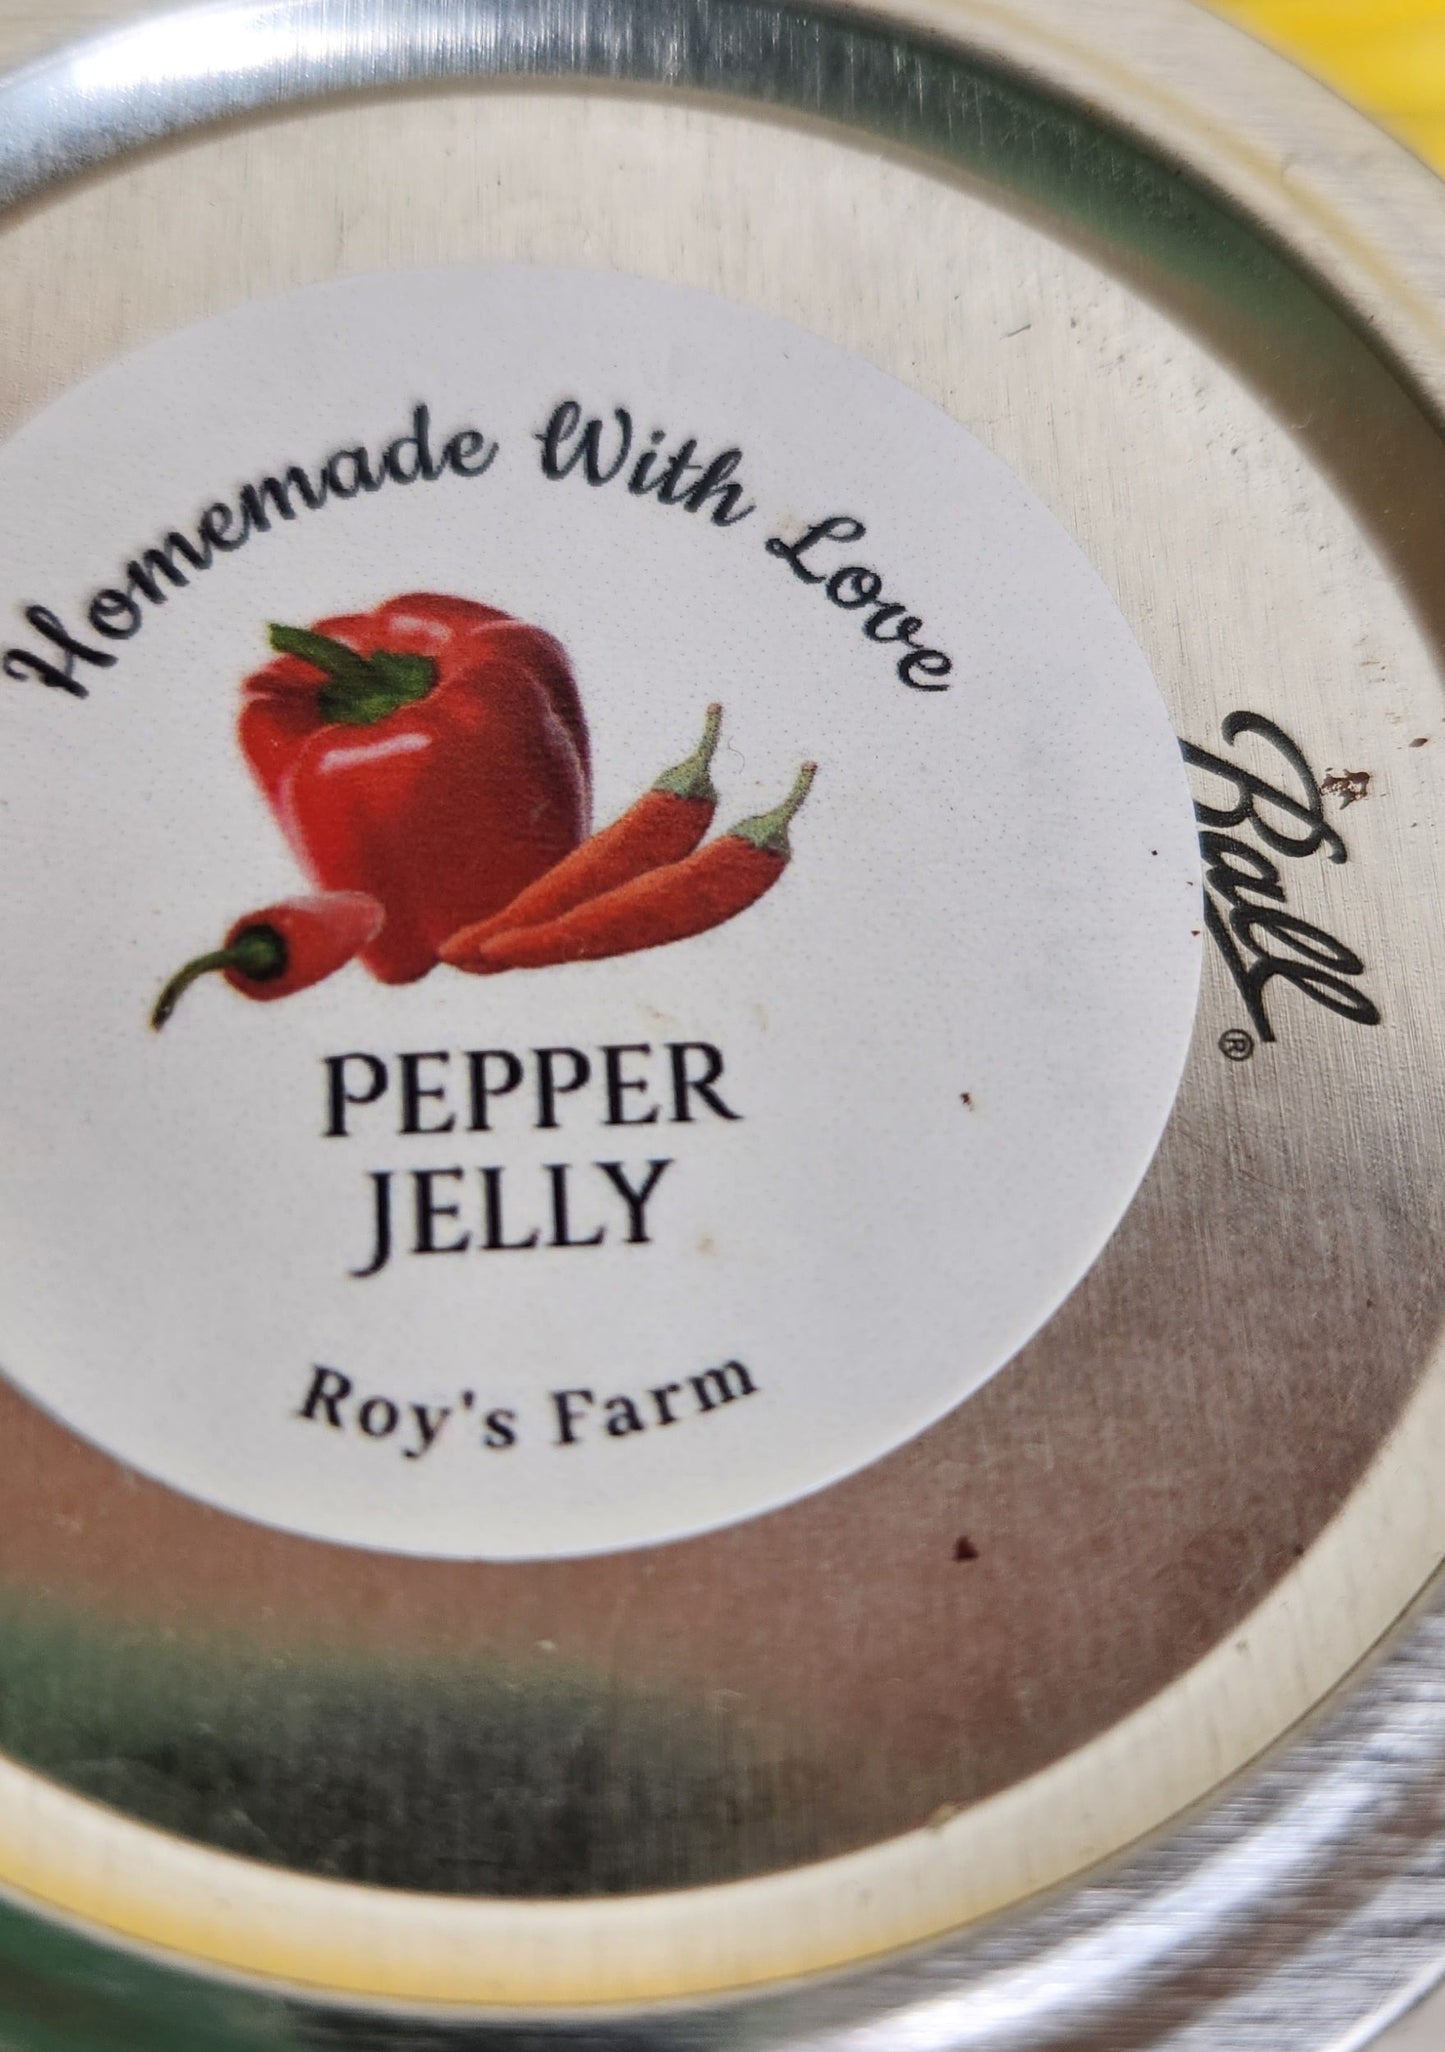 Roy's Farm Pepper Jelly